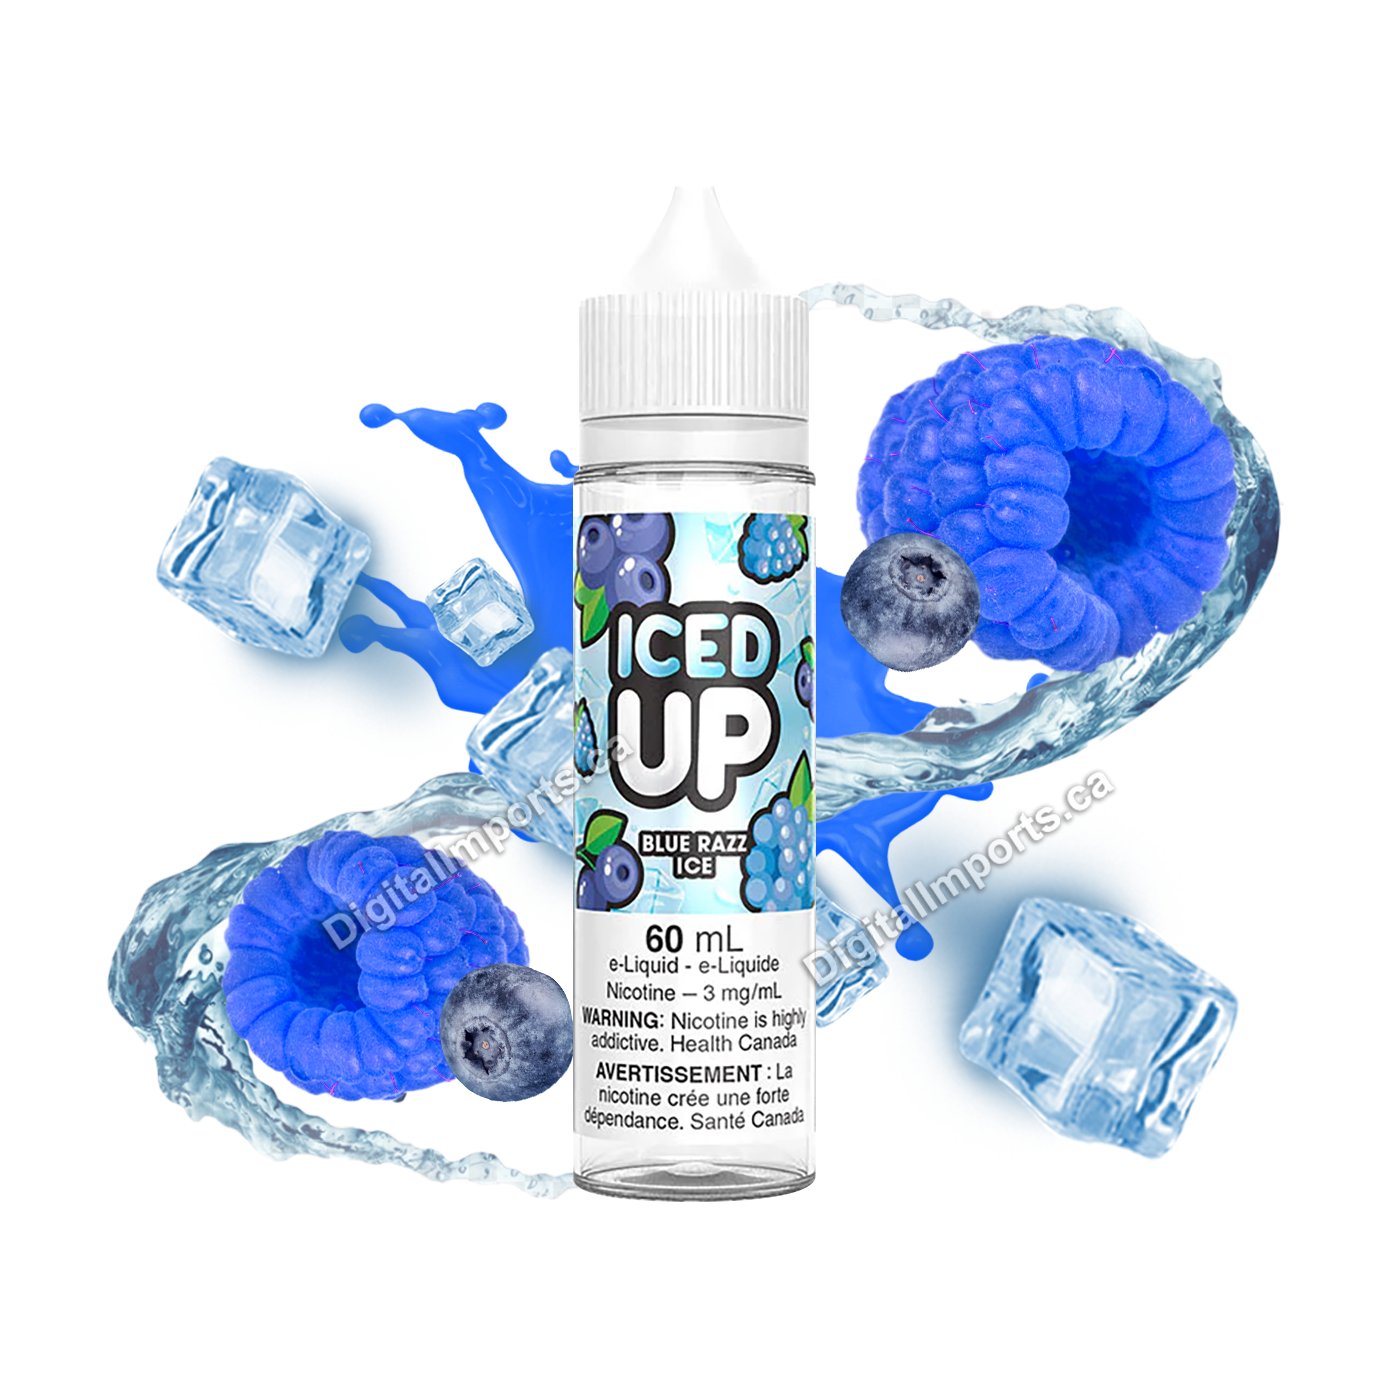 ICED UP - BLUE RAZZ ICE